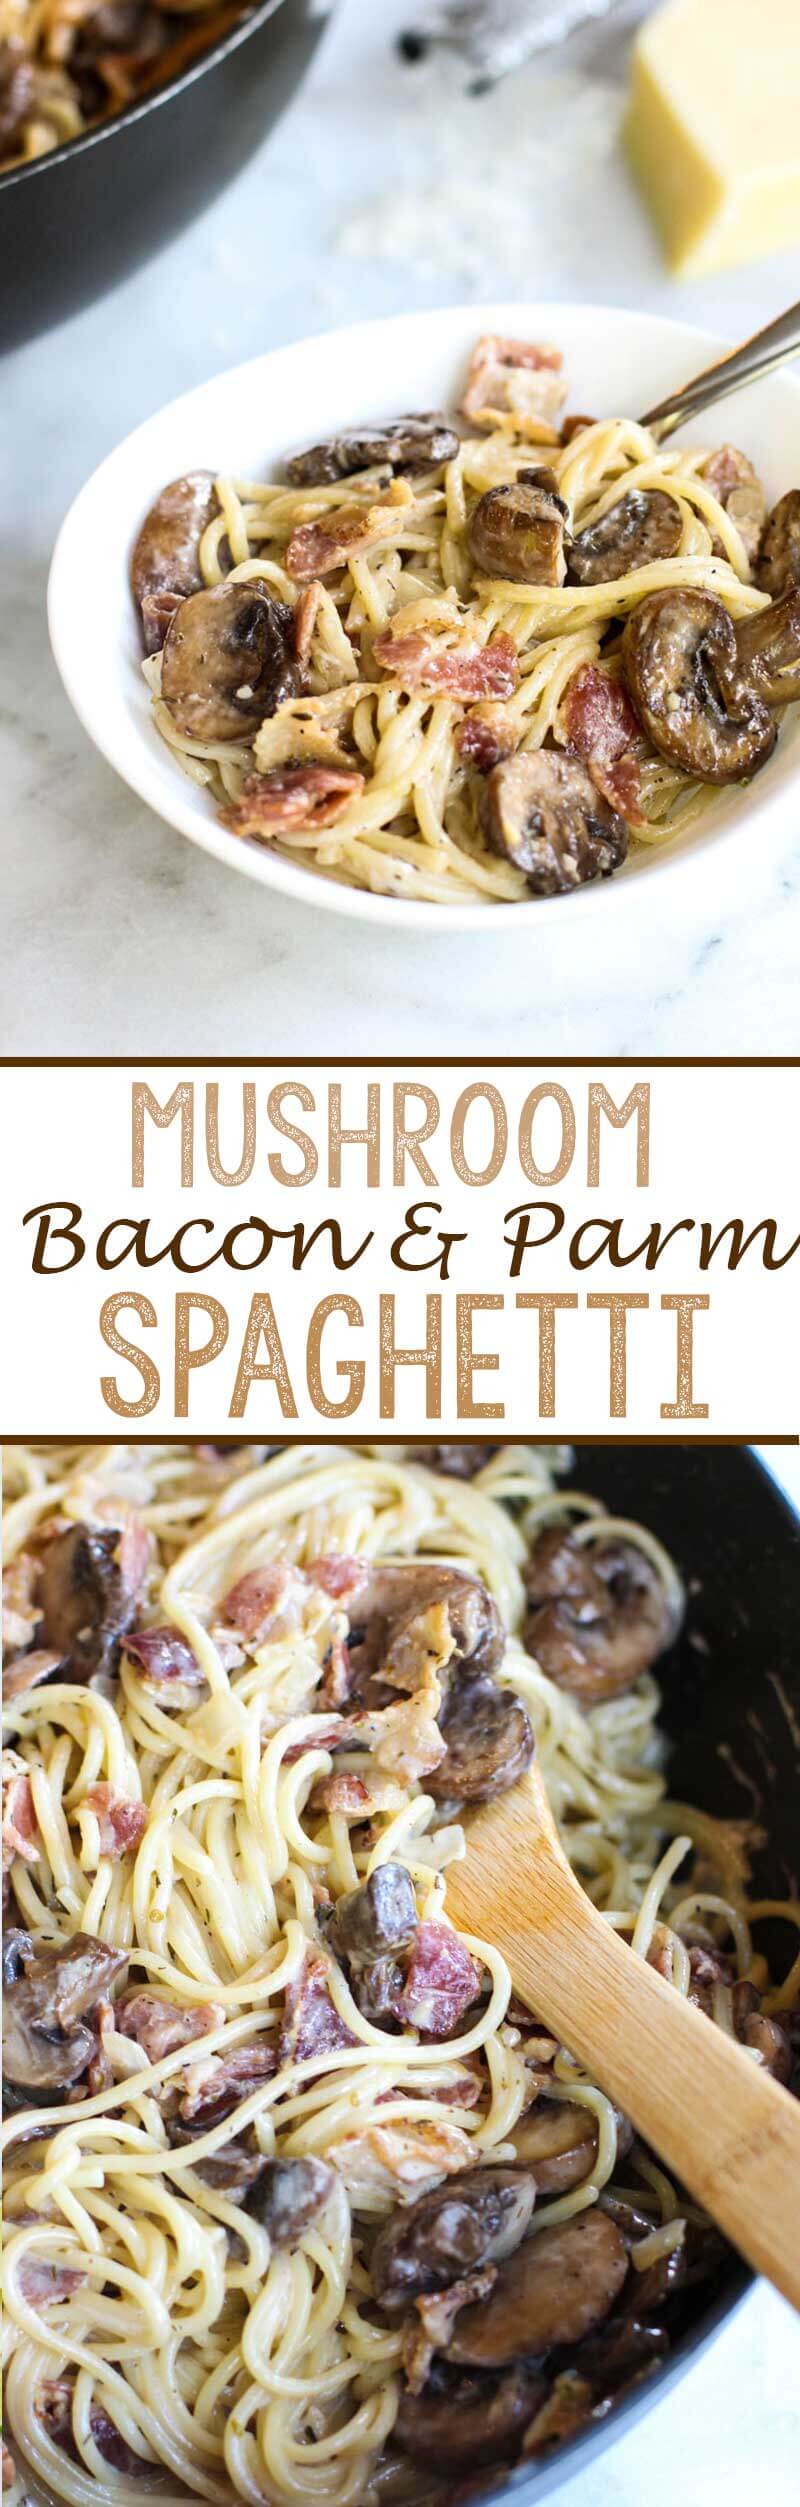 Mushroom bacon and parmesan spaghetti